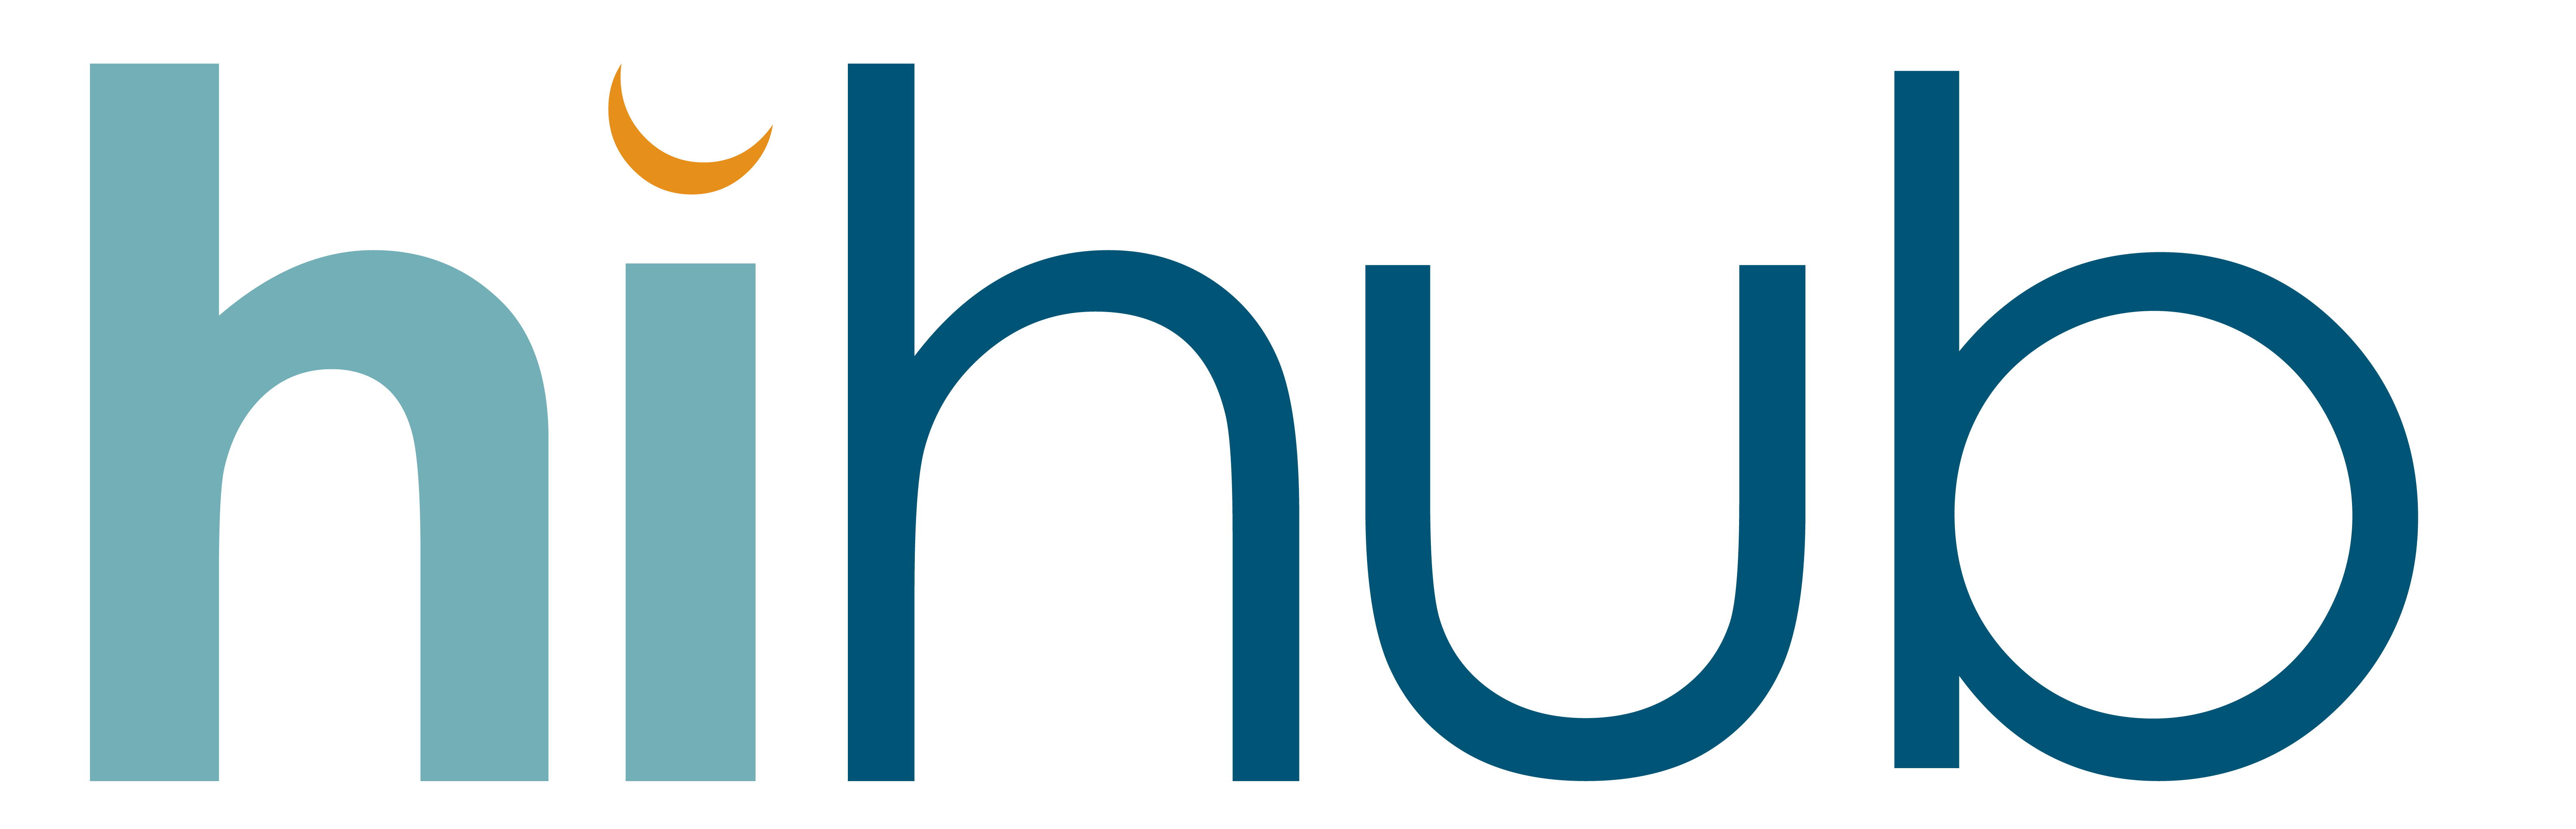 hi_hub-01